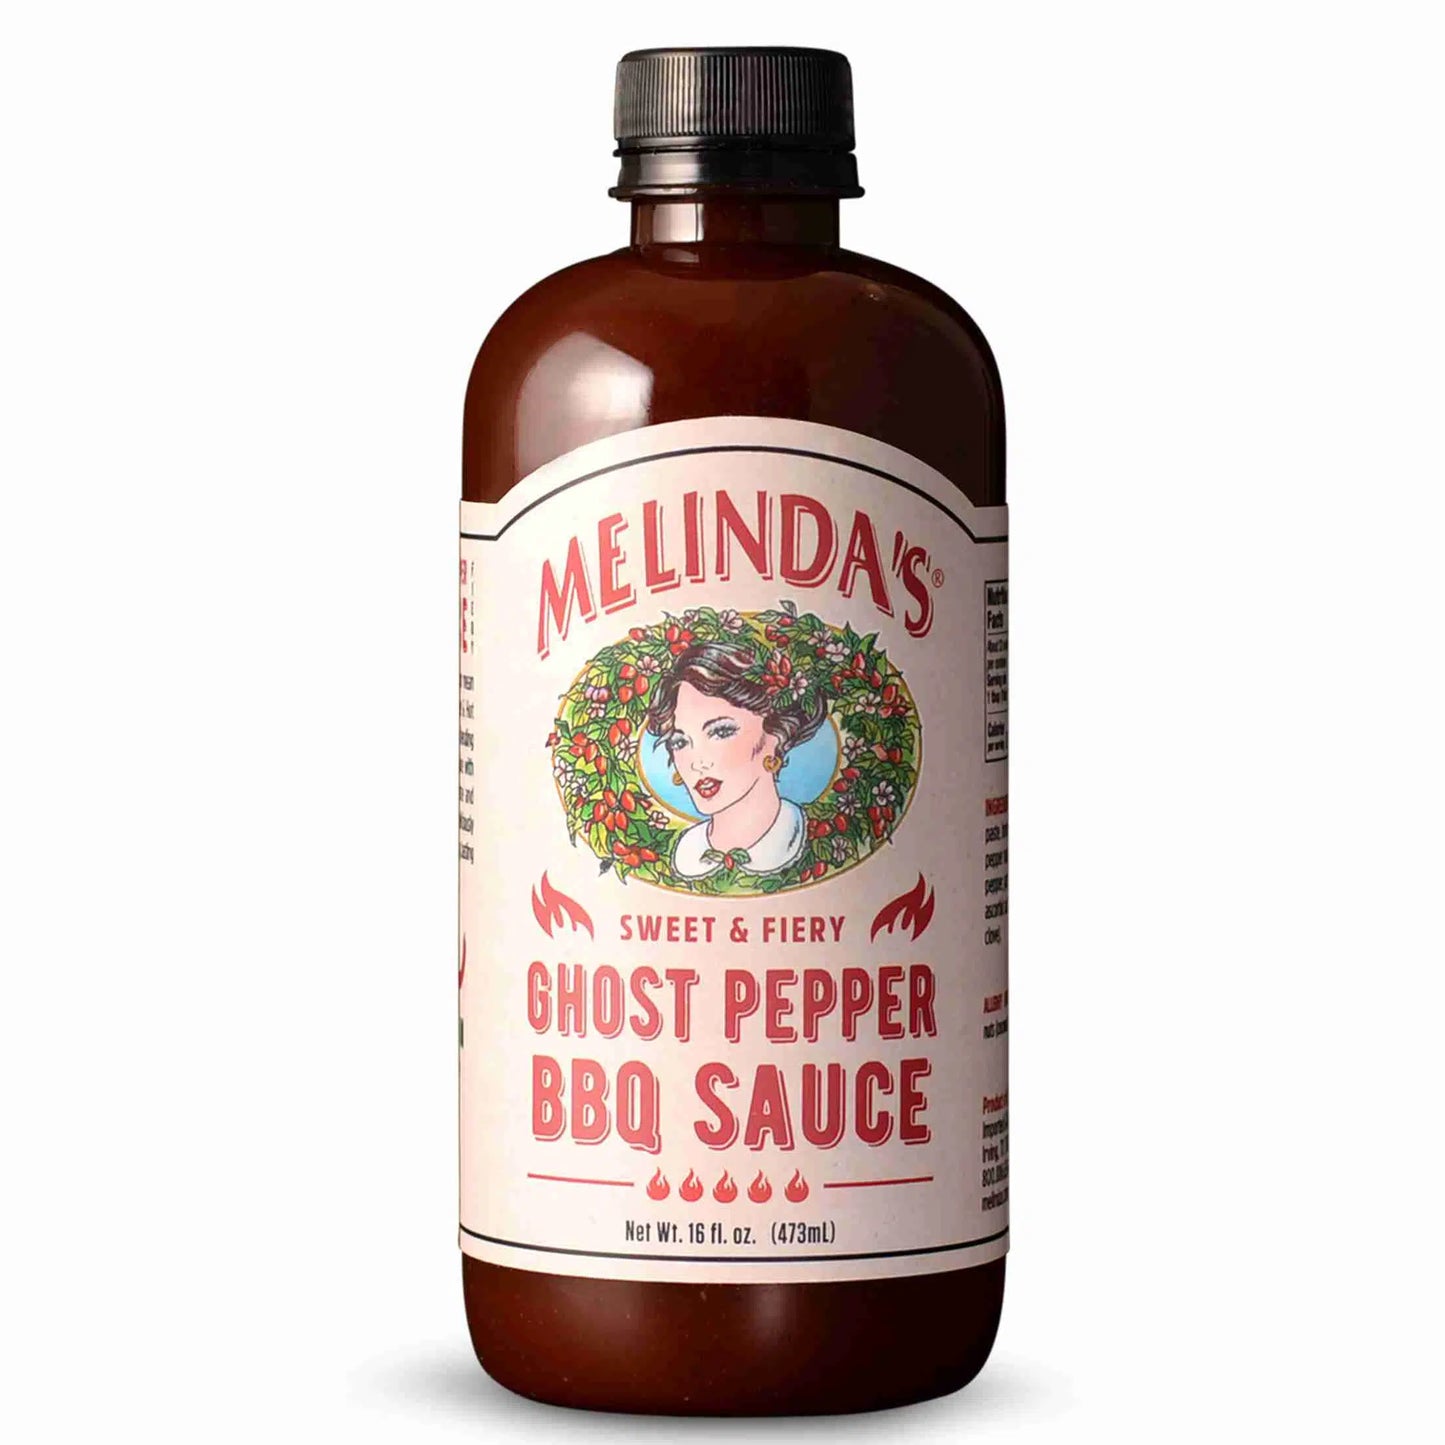 Melinda's Ghost Pepper BBQ sauce